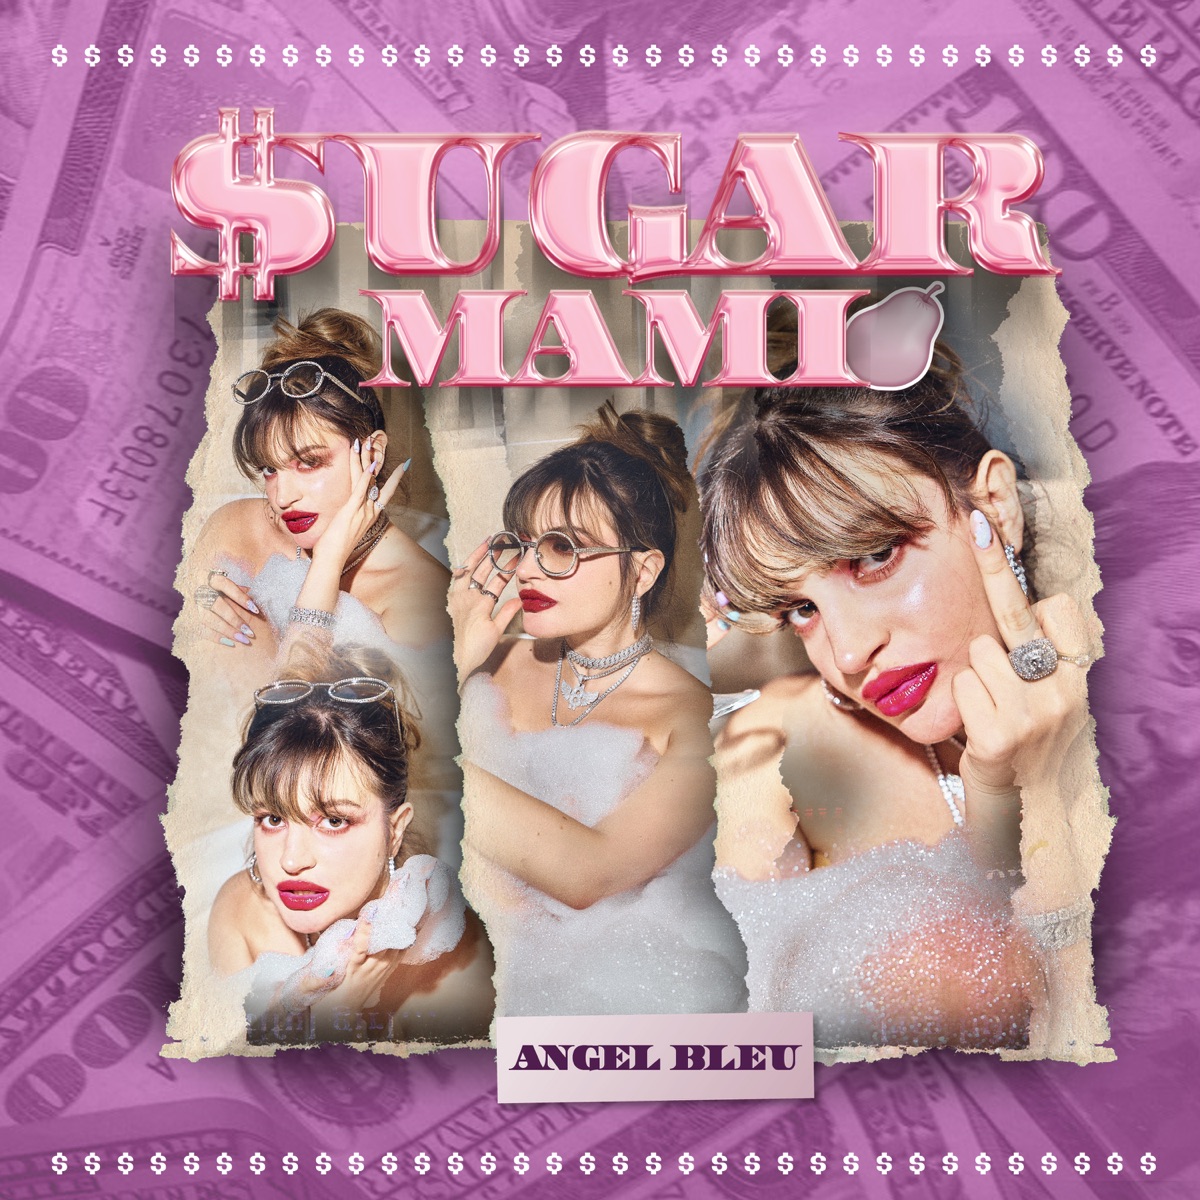 Angel Bleu - $ugar Mami - Single